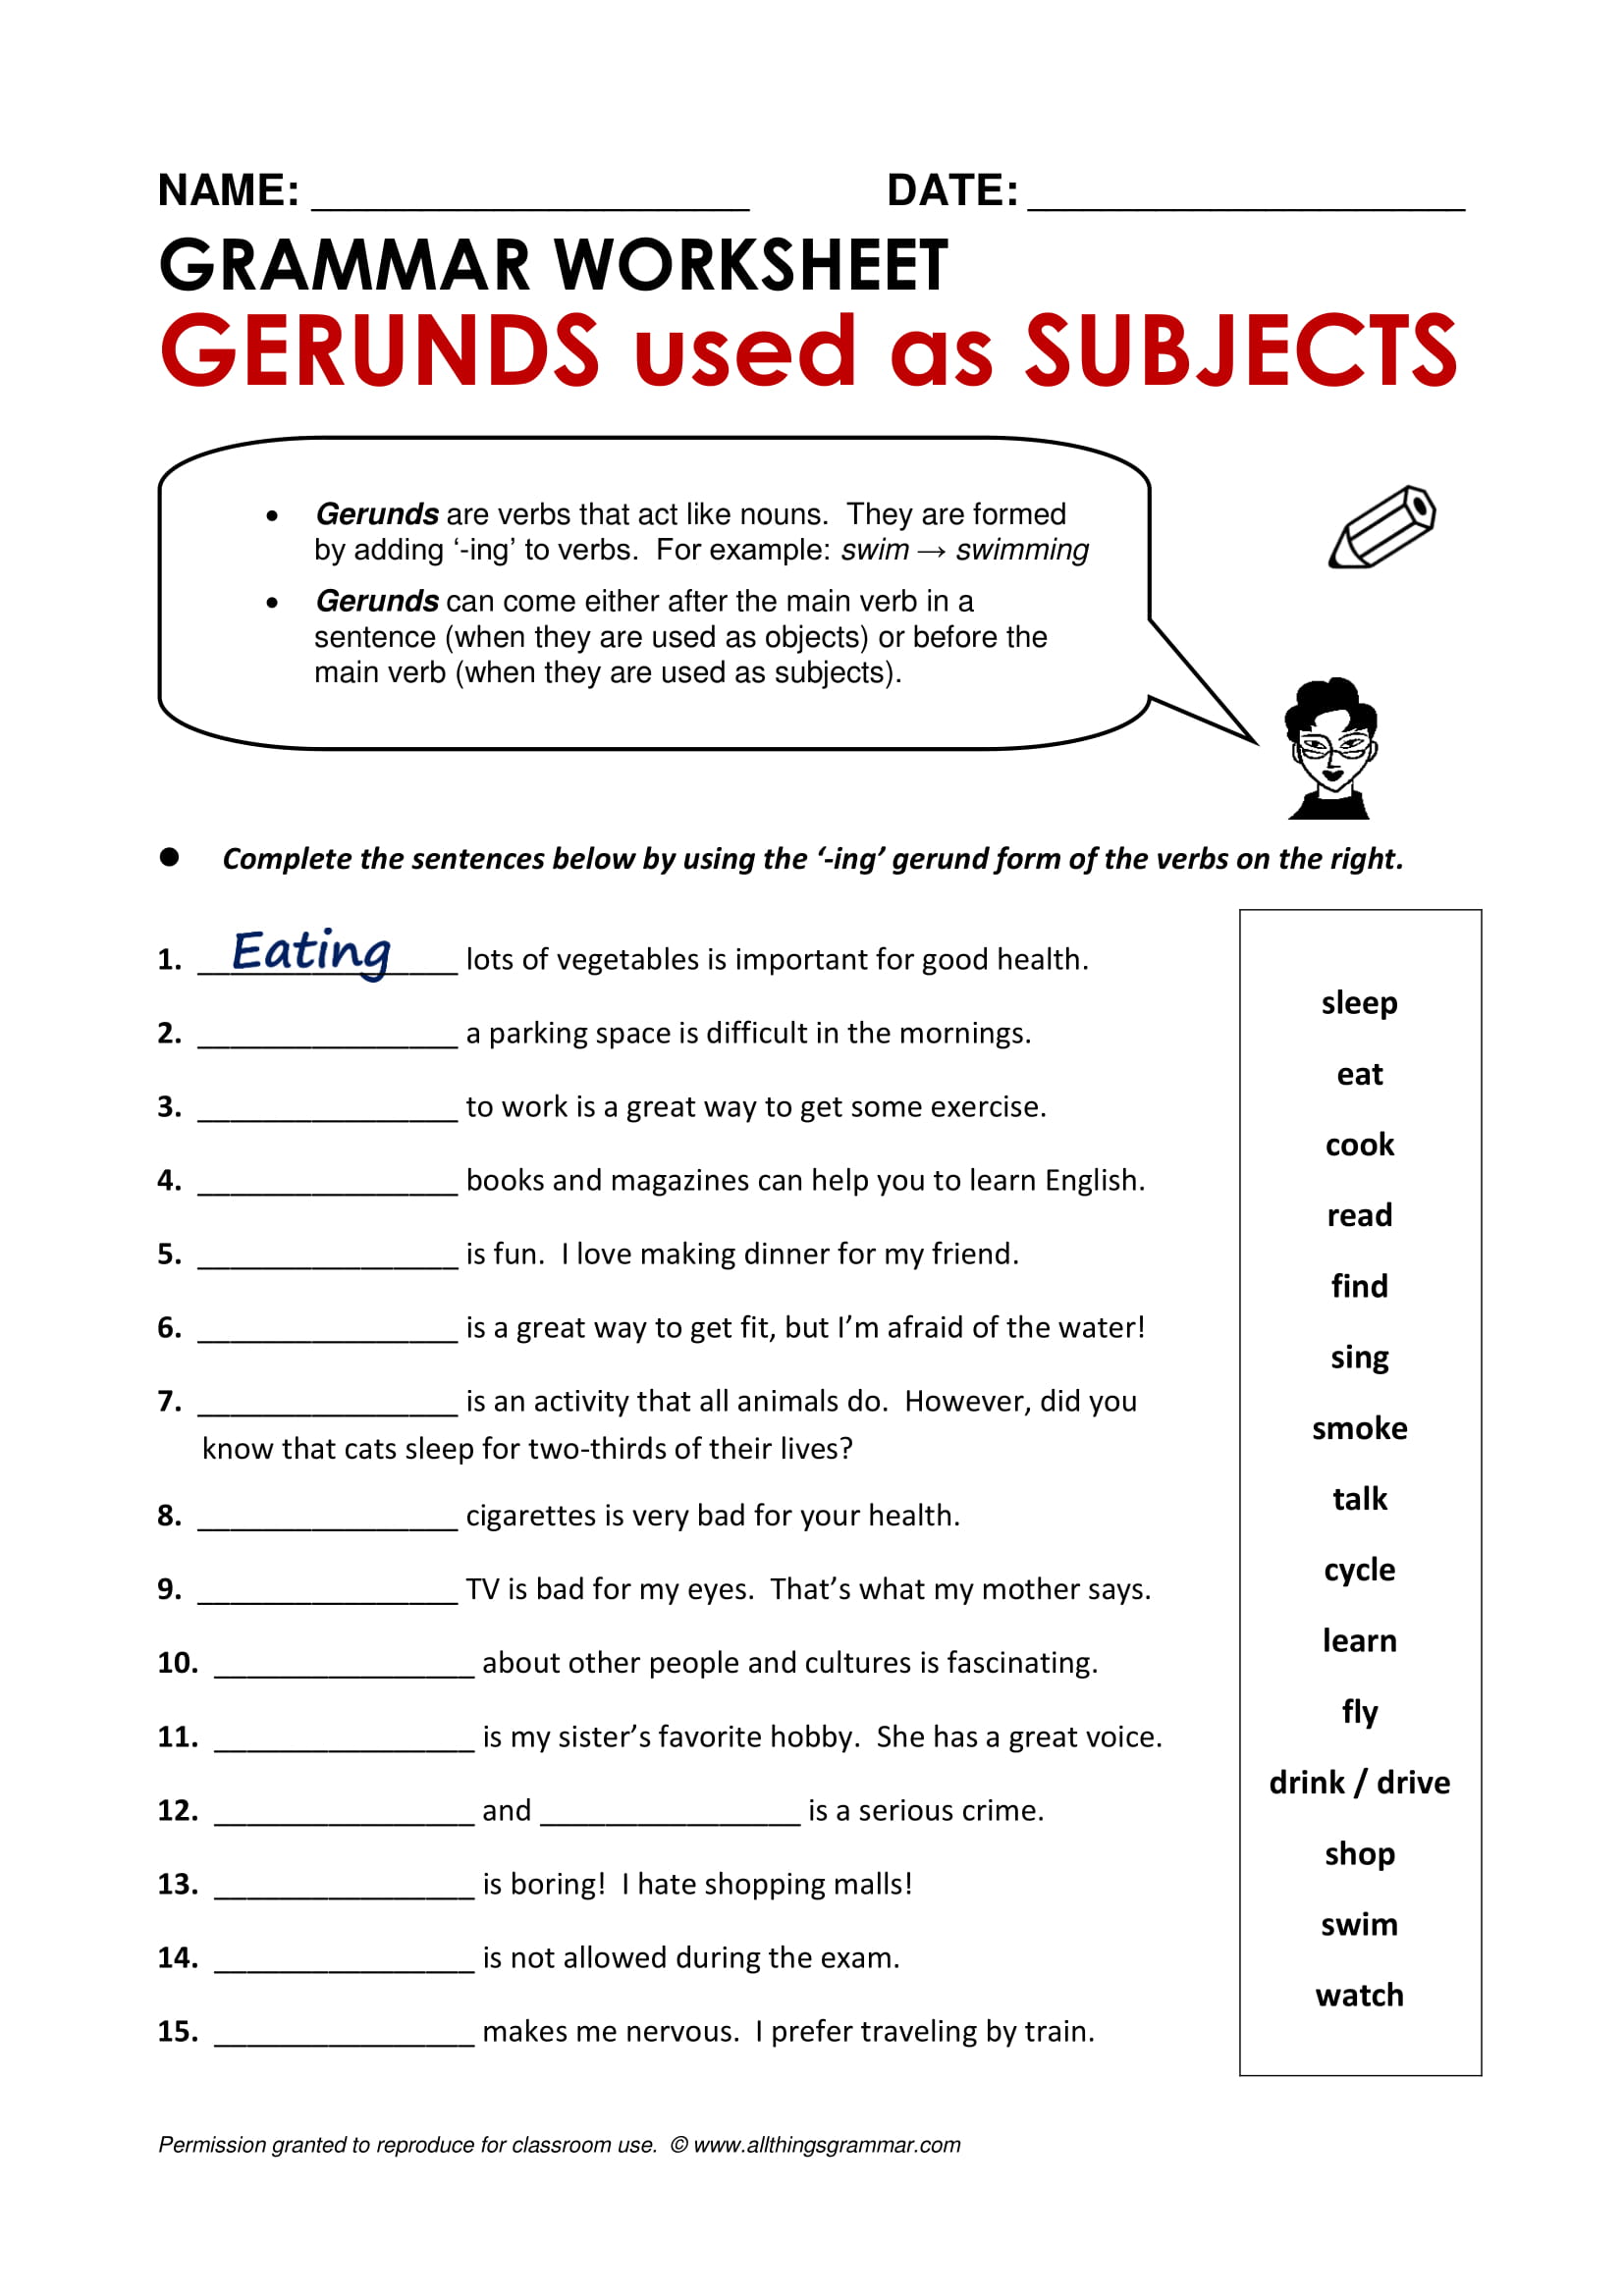 gerunds as subject worksheet example